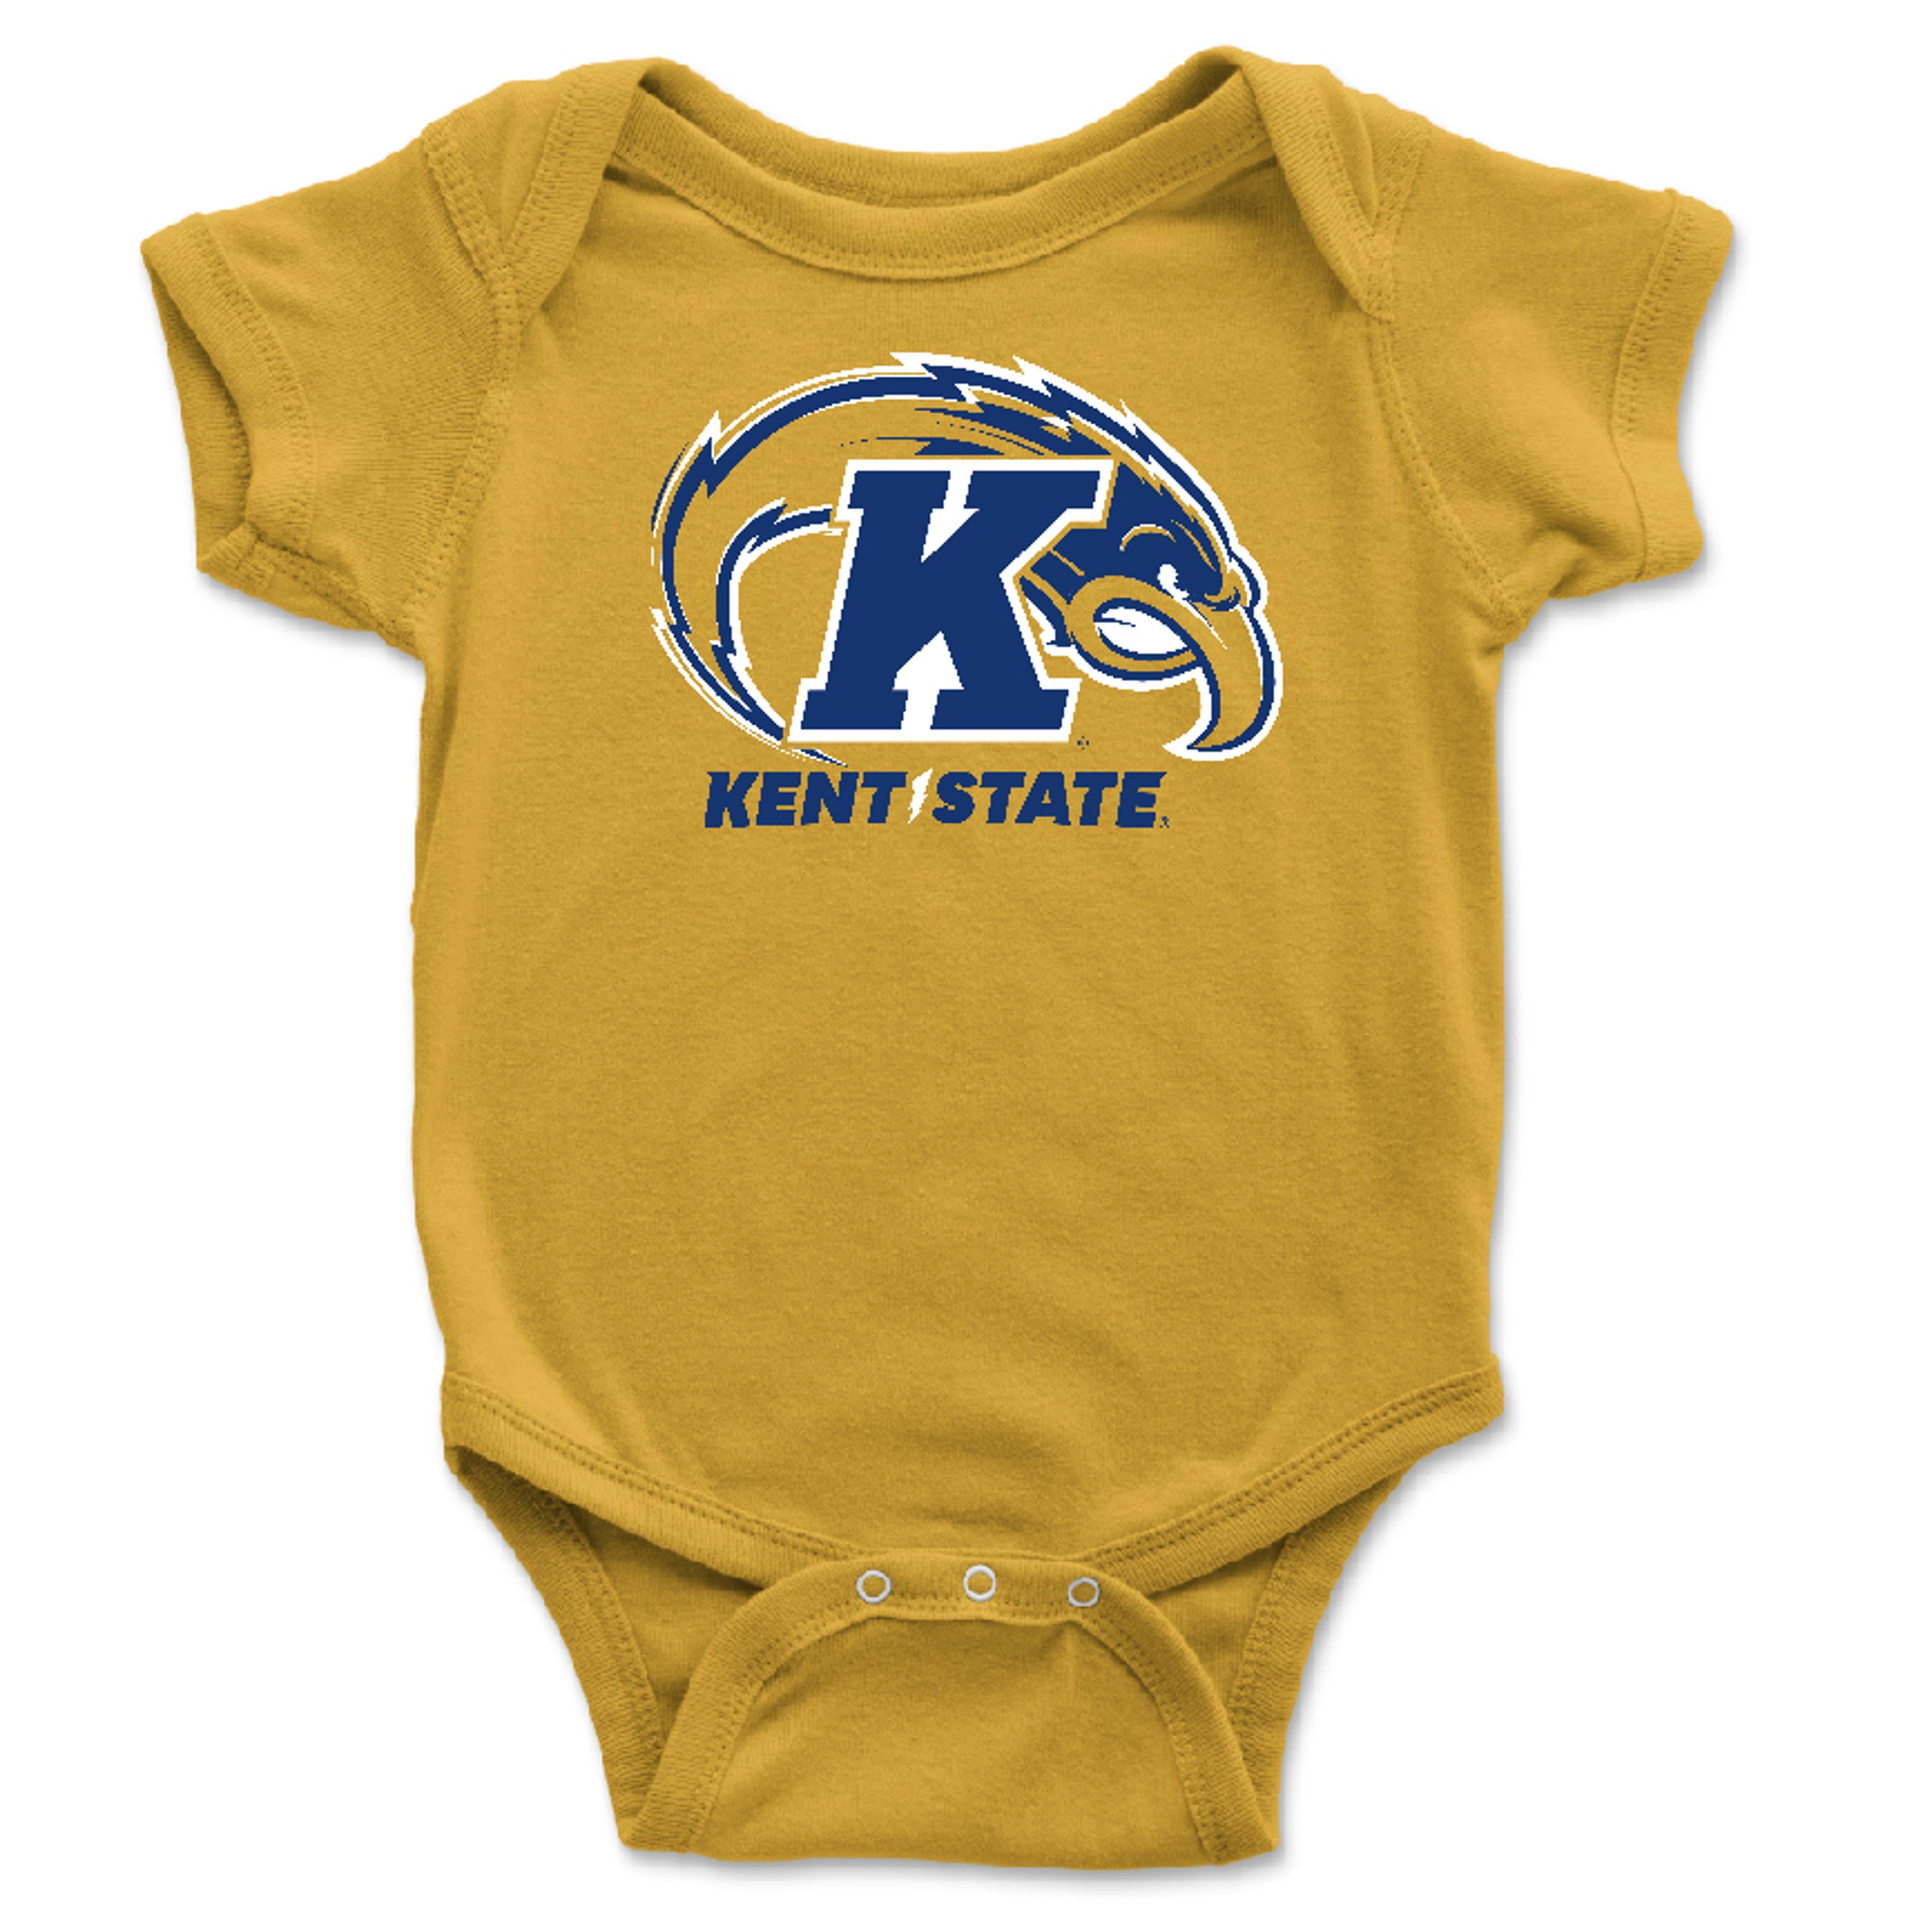 Kent State Gold Infant Bodysuit